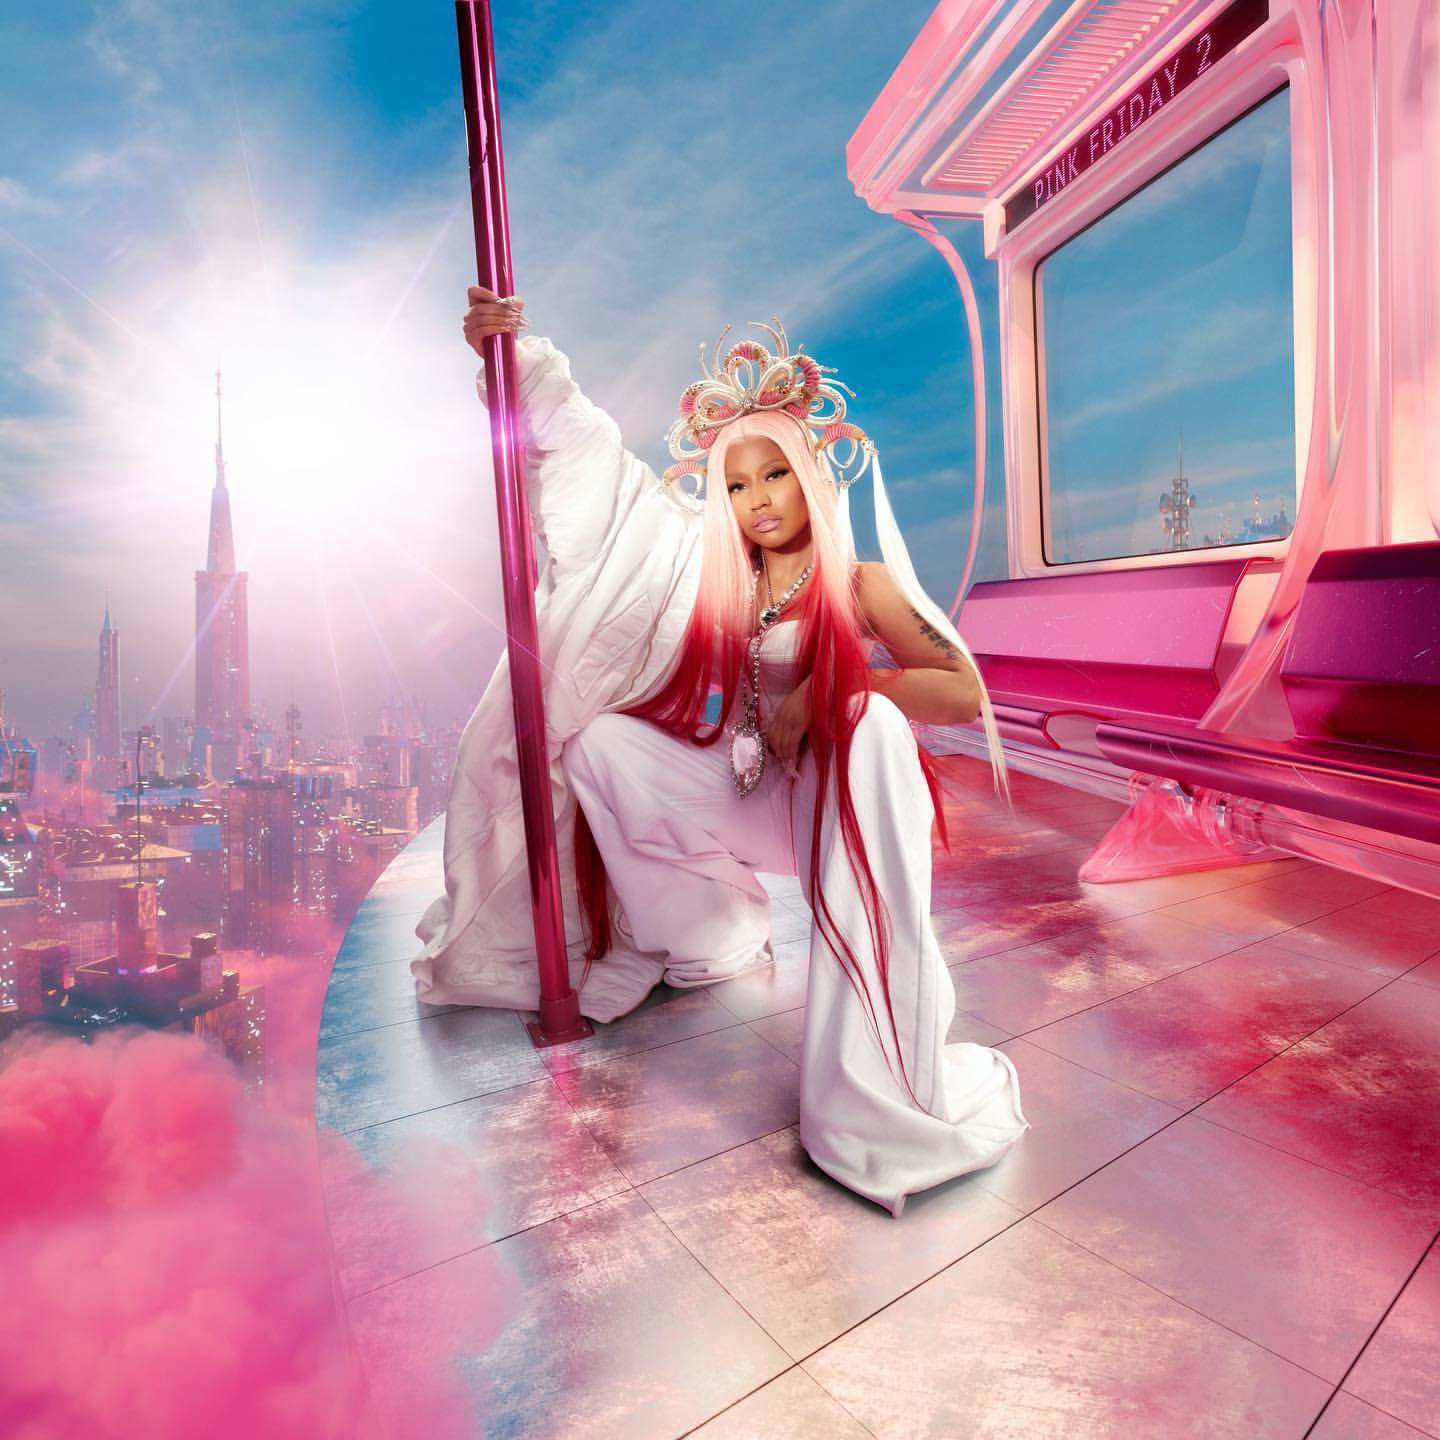 Rap Alert on X: Nicki Minaj “Pink Friday 2” cover outtake. https://t.co/tOPmJweJJn / X